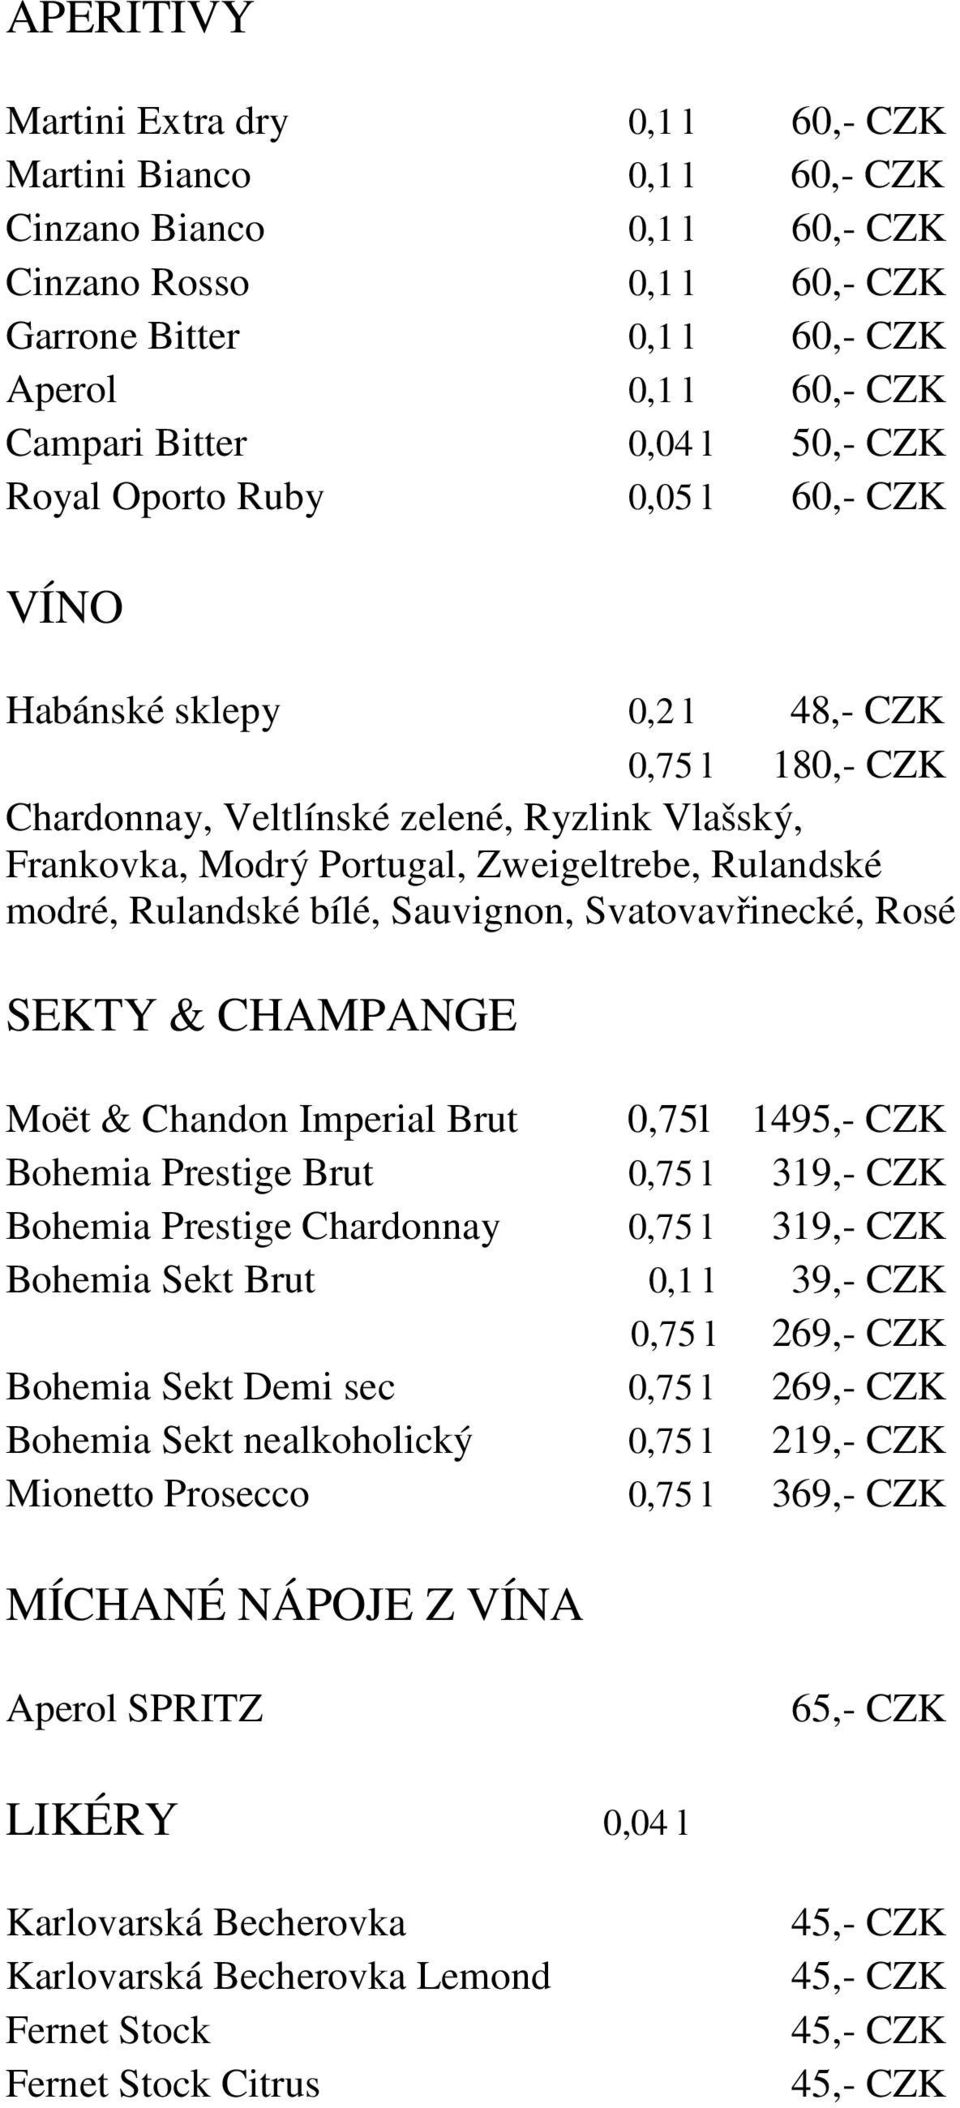 Moët & Chandon Imperial Brut 0,75l 14 Bohemia Prestige Brut 0,75 l 319,- CZK Bohemia Prestige Chardonnay 0,75 l 319,- CZK Bohemia Sekt Brut 0,1 l 39,- CZK 0,75 l 269,- CZK Bohemia Sekt Demi sec 0,75